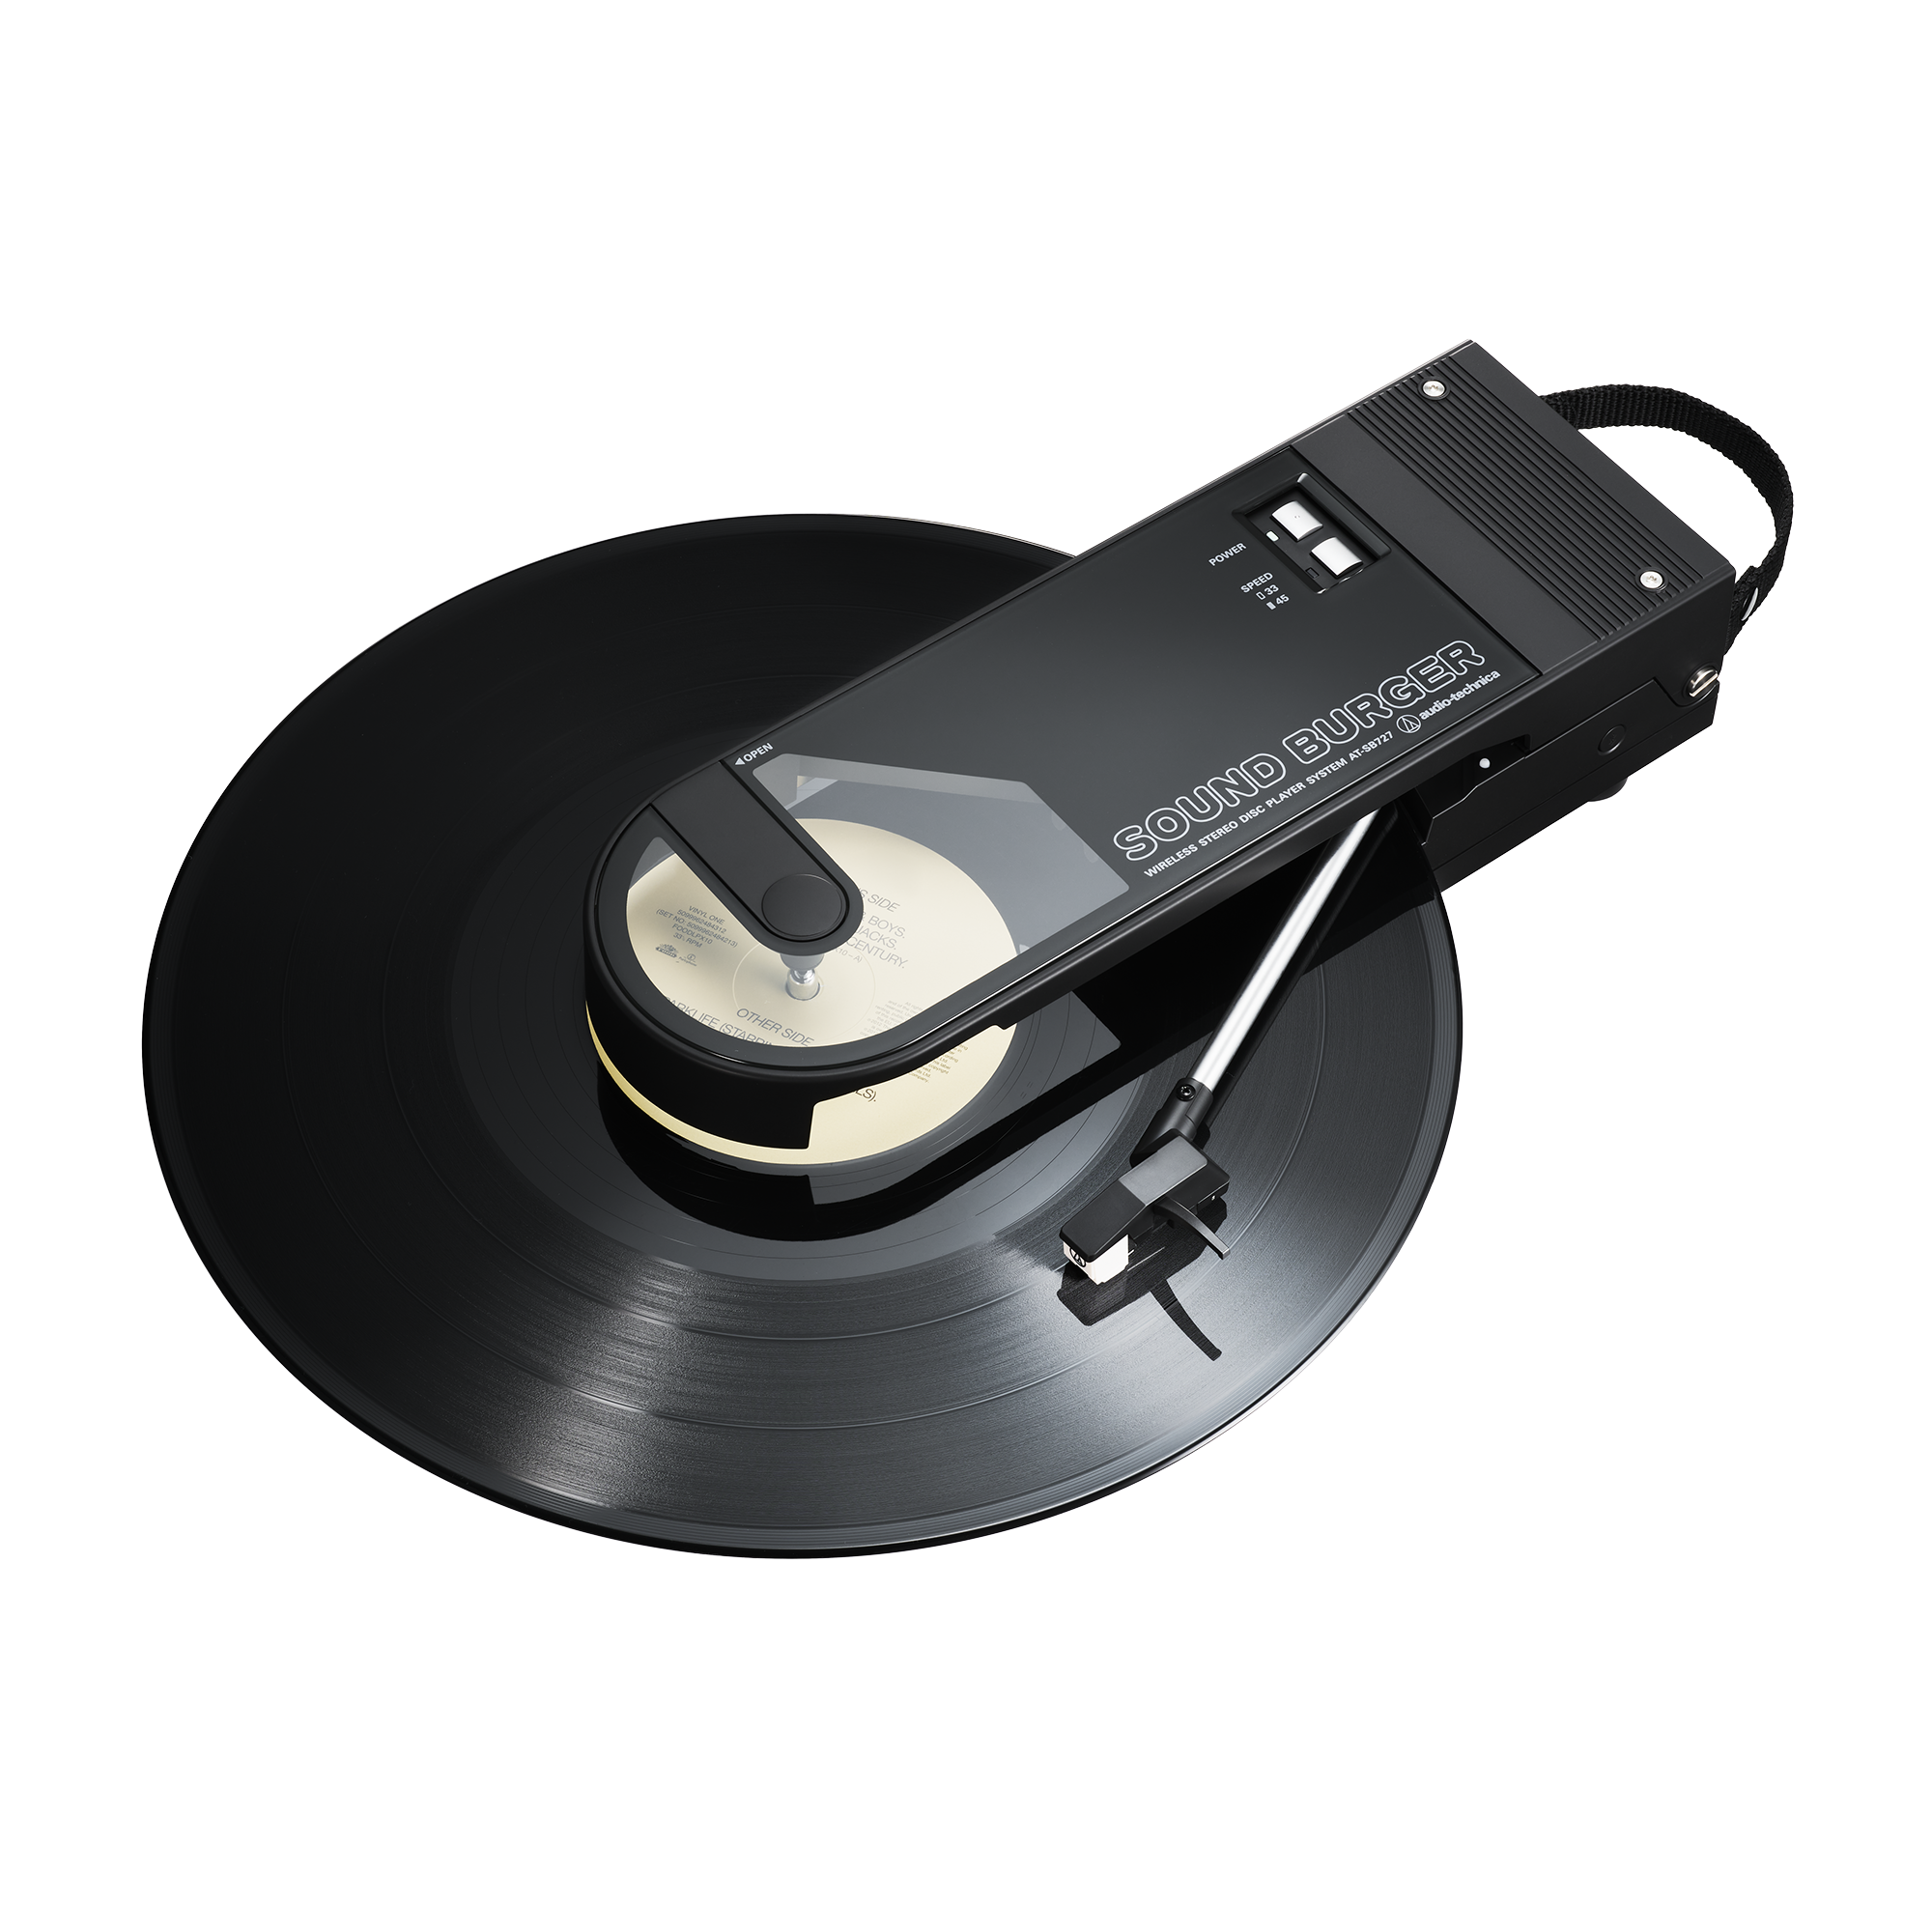 Audio Technica Sound Burger Portable Bluetooth Turntable